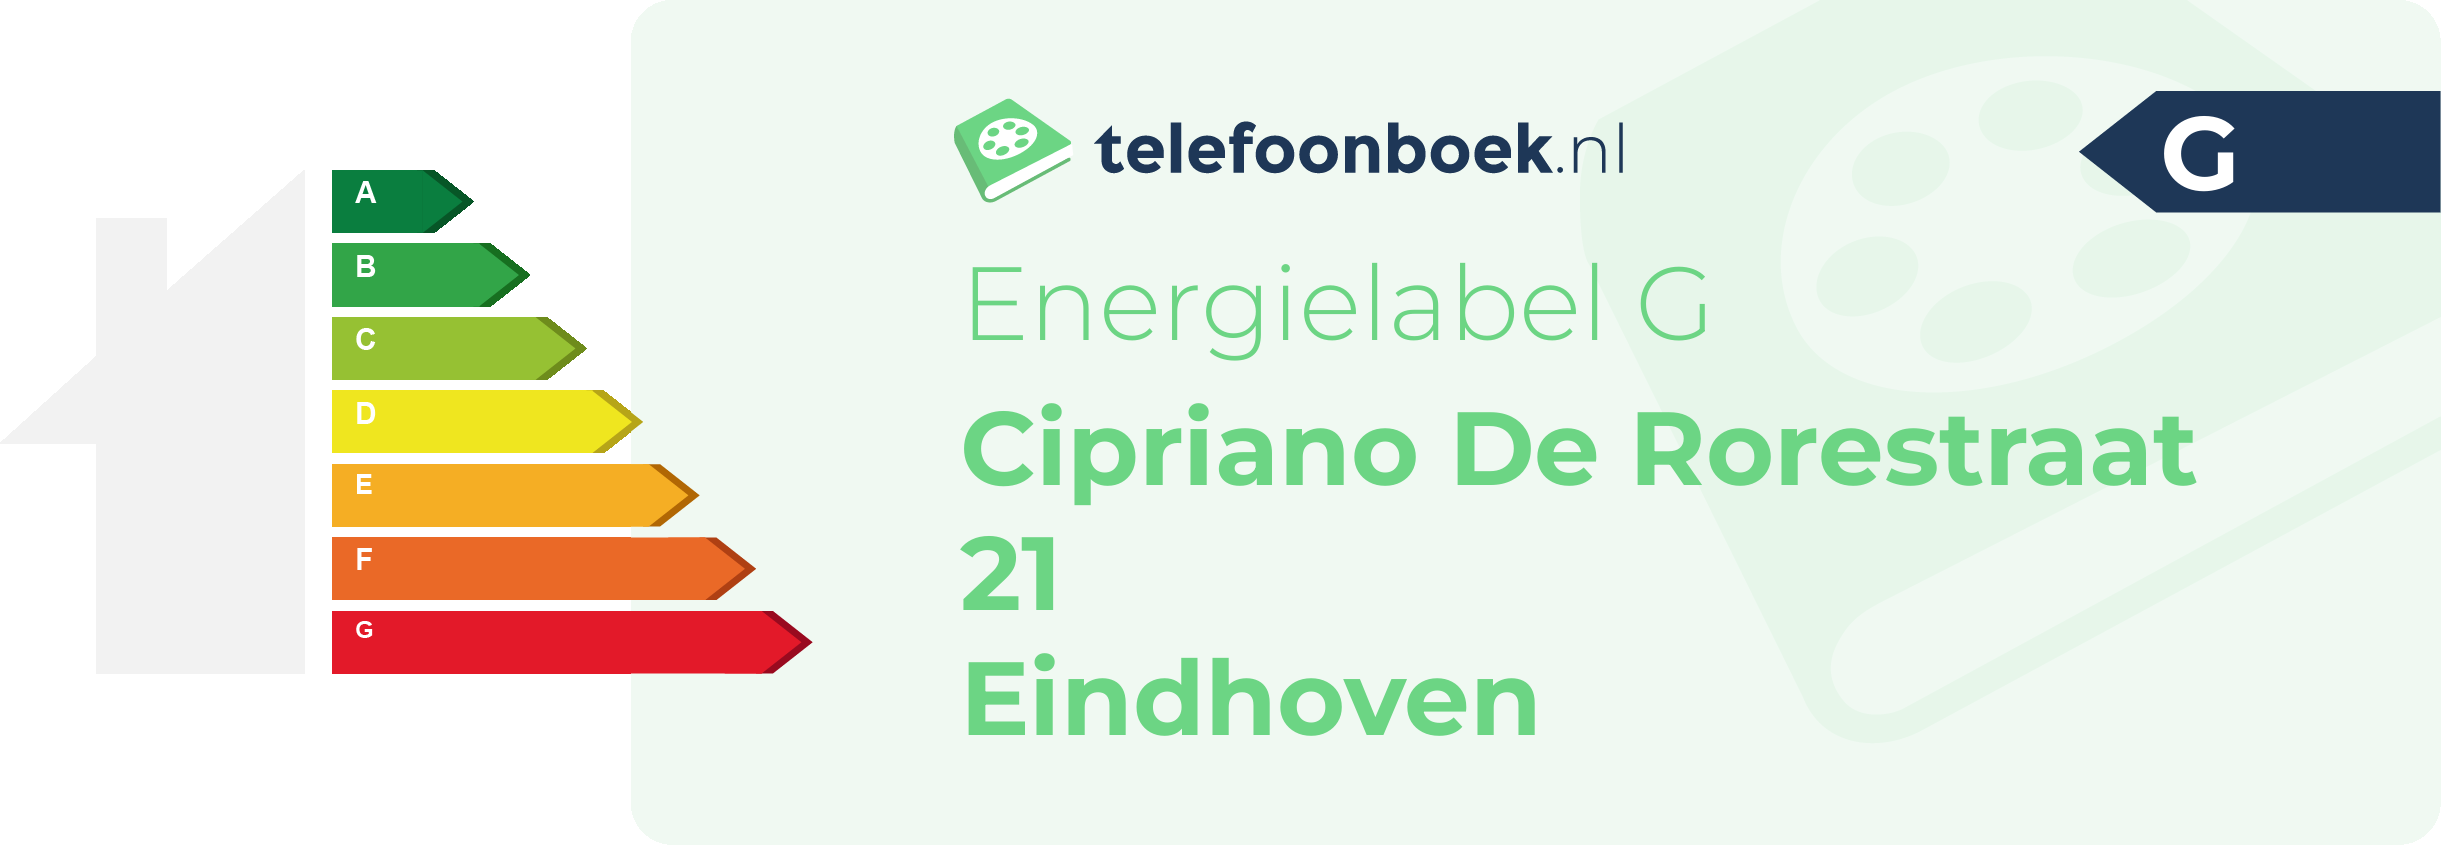 Energielabel Cipriano De Rorestraat 21 Eindhoven